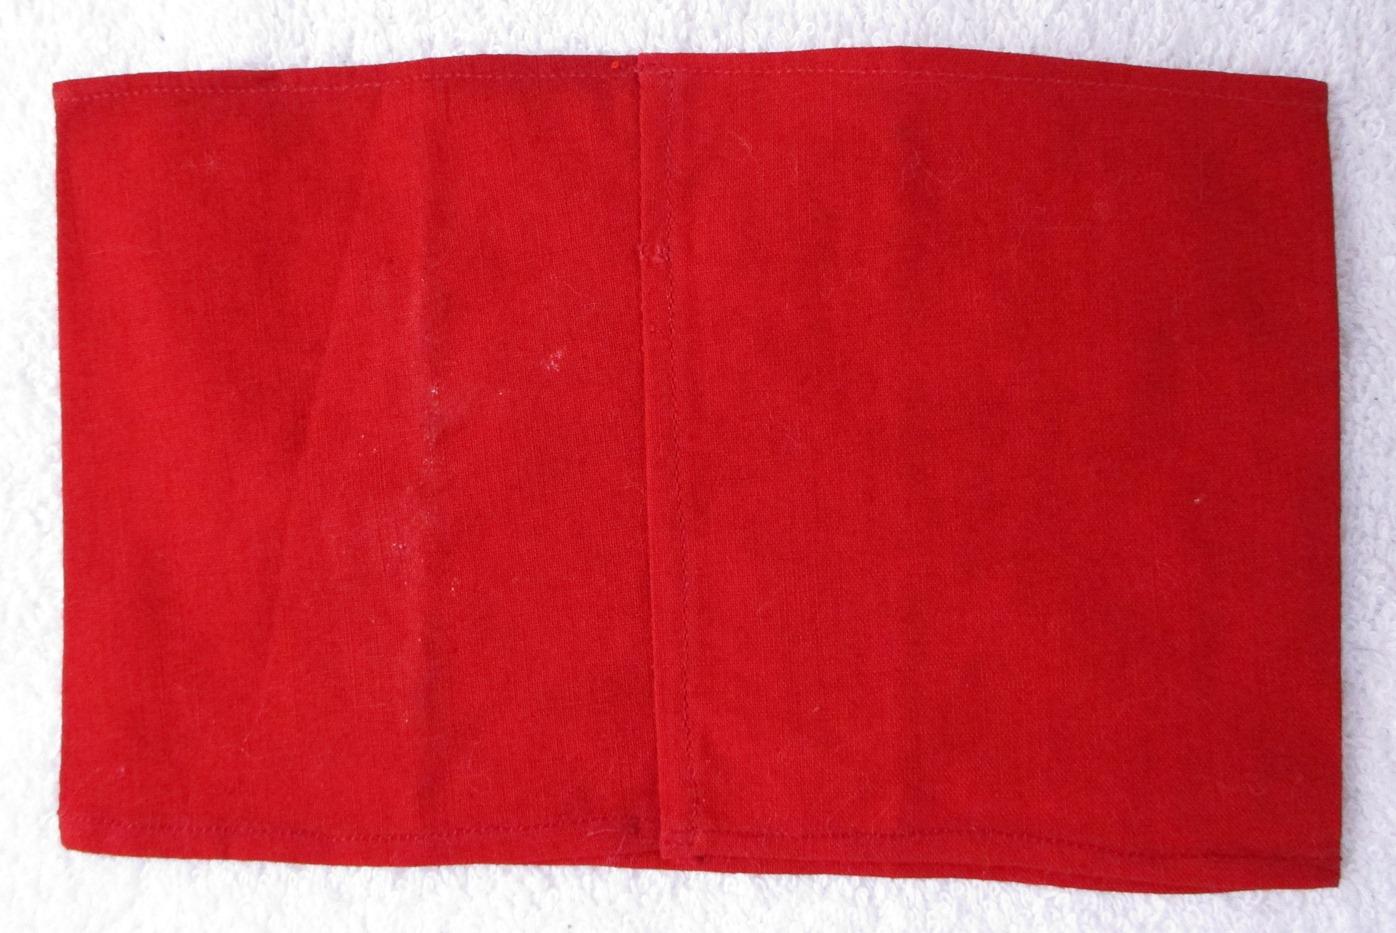 NSDAP Armband-Printed Swastika On White Circular Field Sewn To Red Cotton Base.